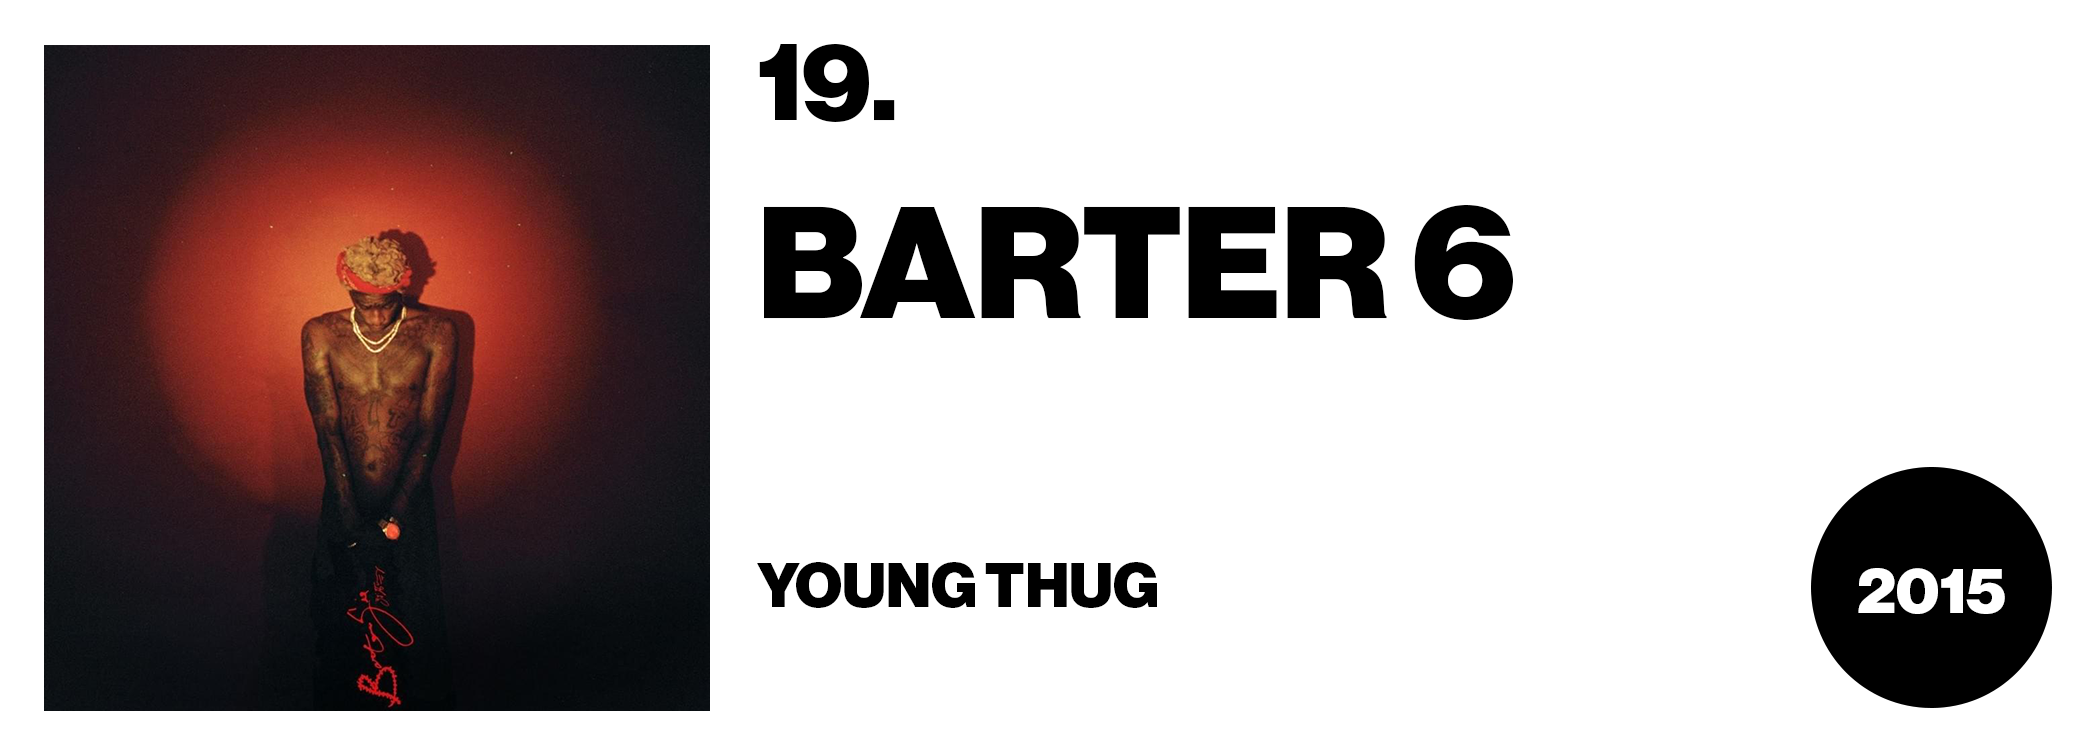 young thug barter 6 unblocked